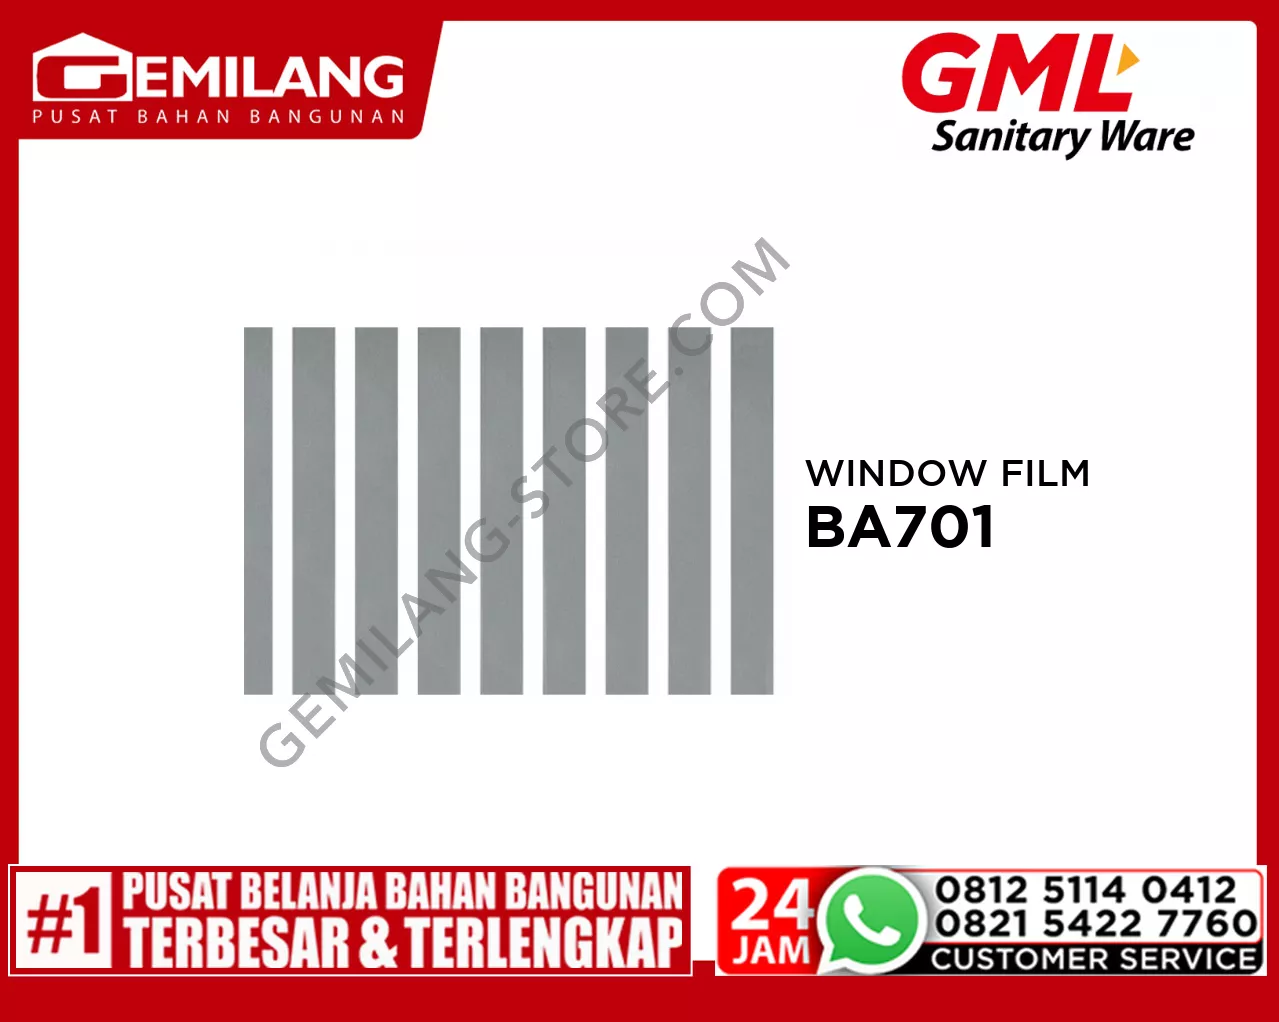 GML 2D STATIC WINDOW FILM BA701 50 x 90cm x 0.18mm